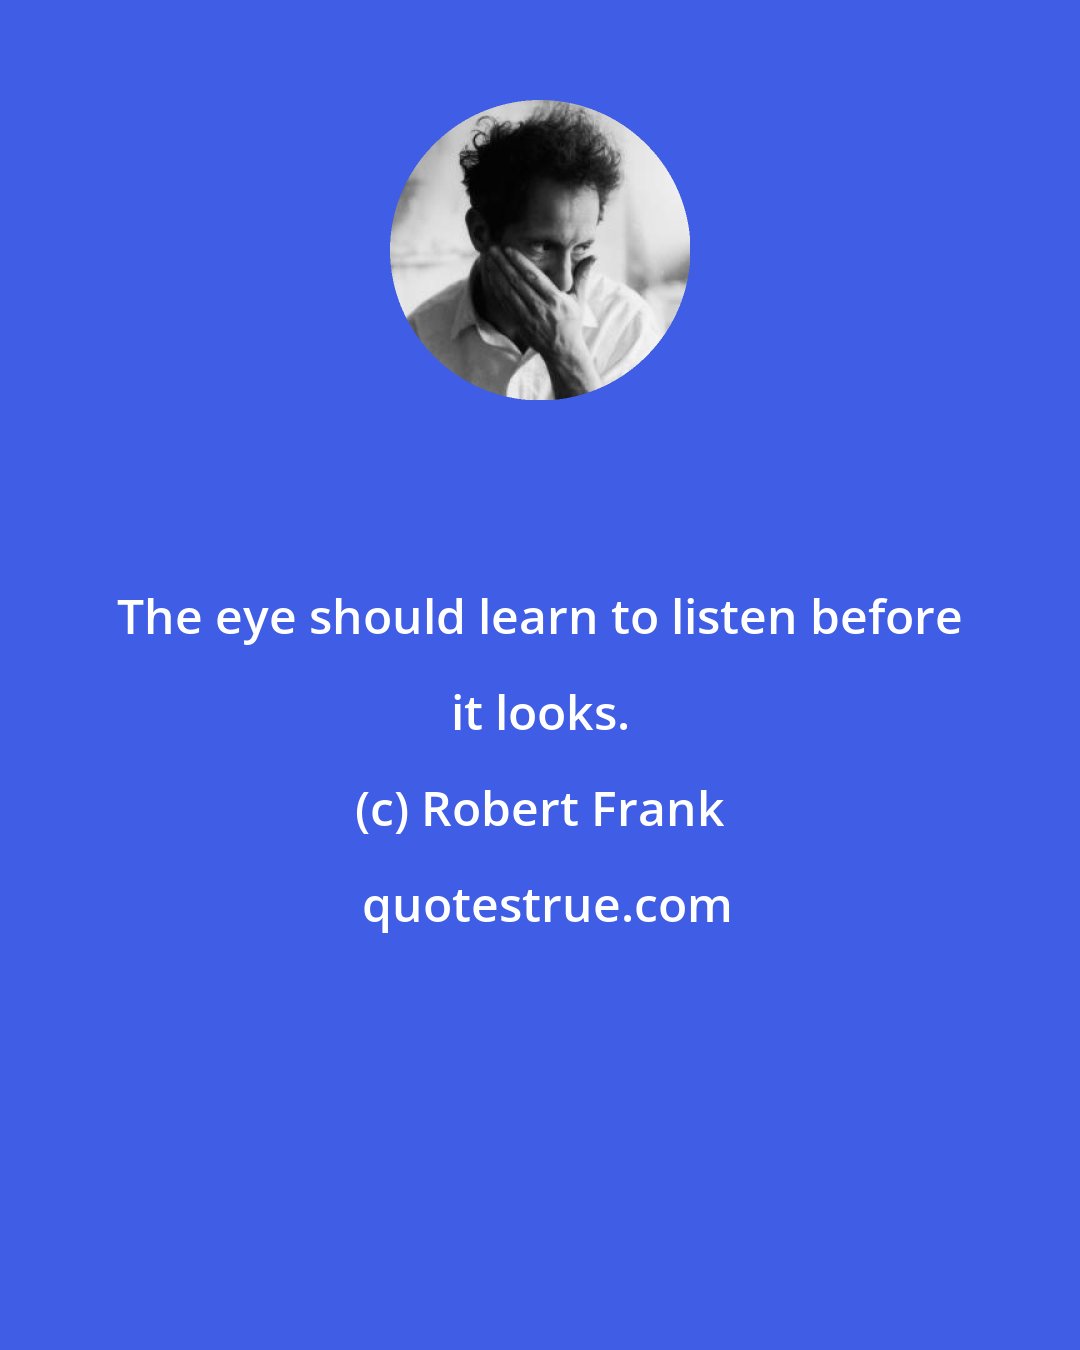 Robert Frank: The eye should learn to listen before it looks.